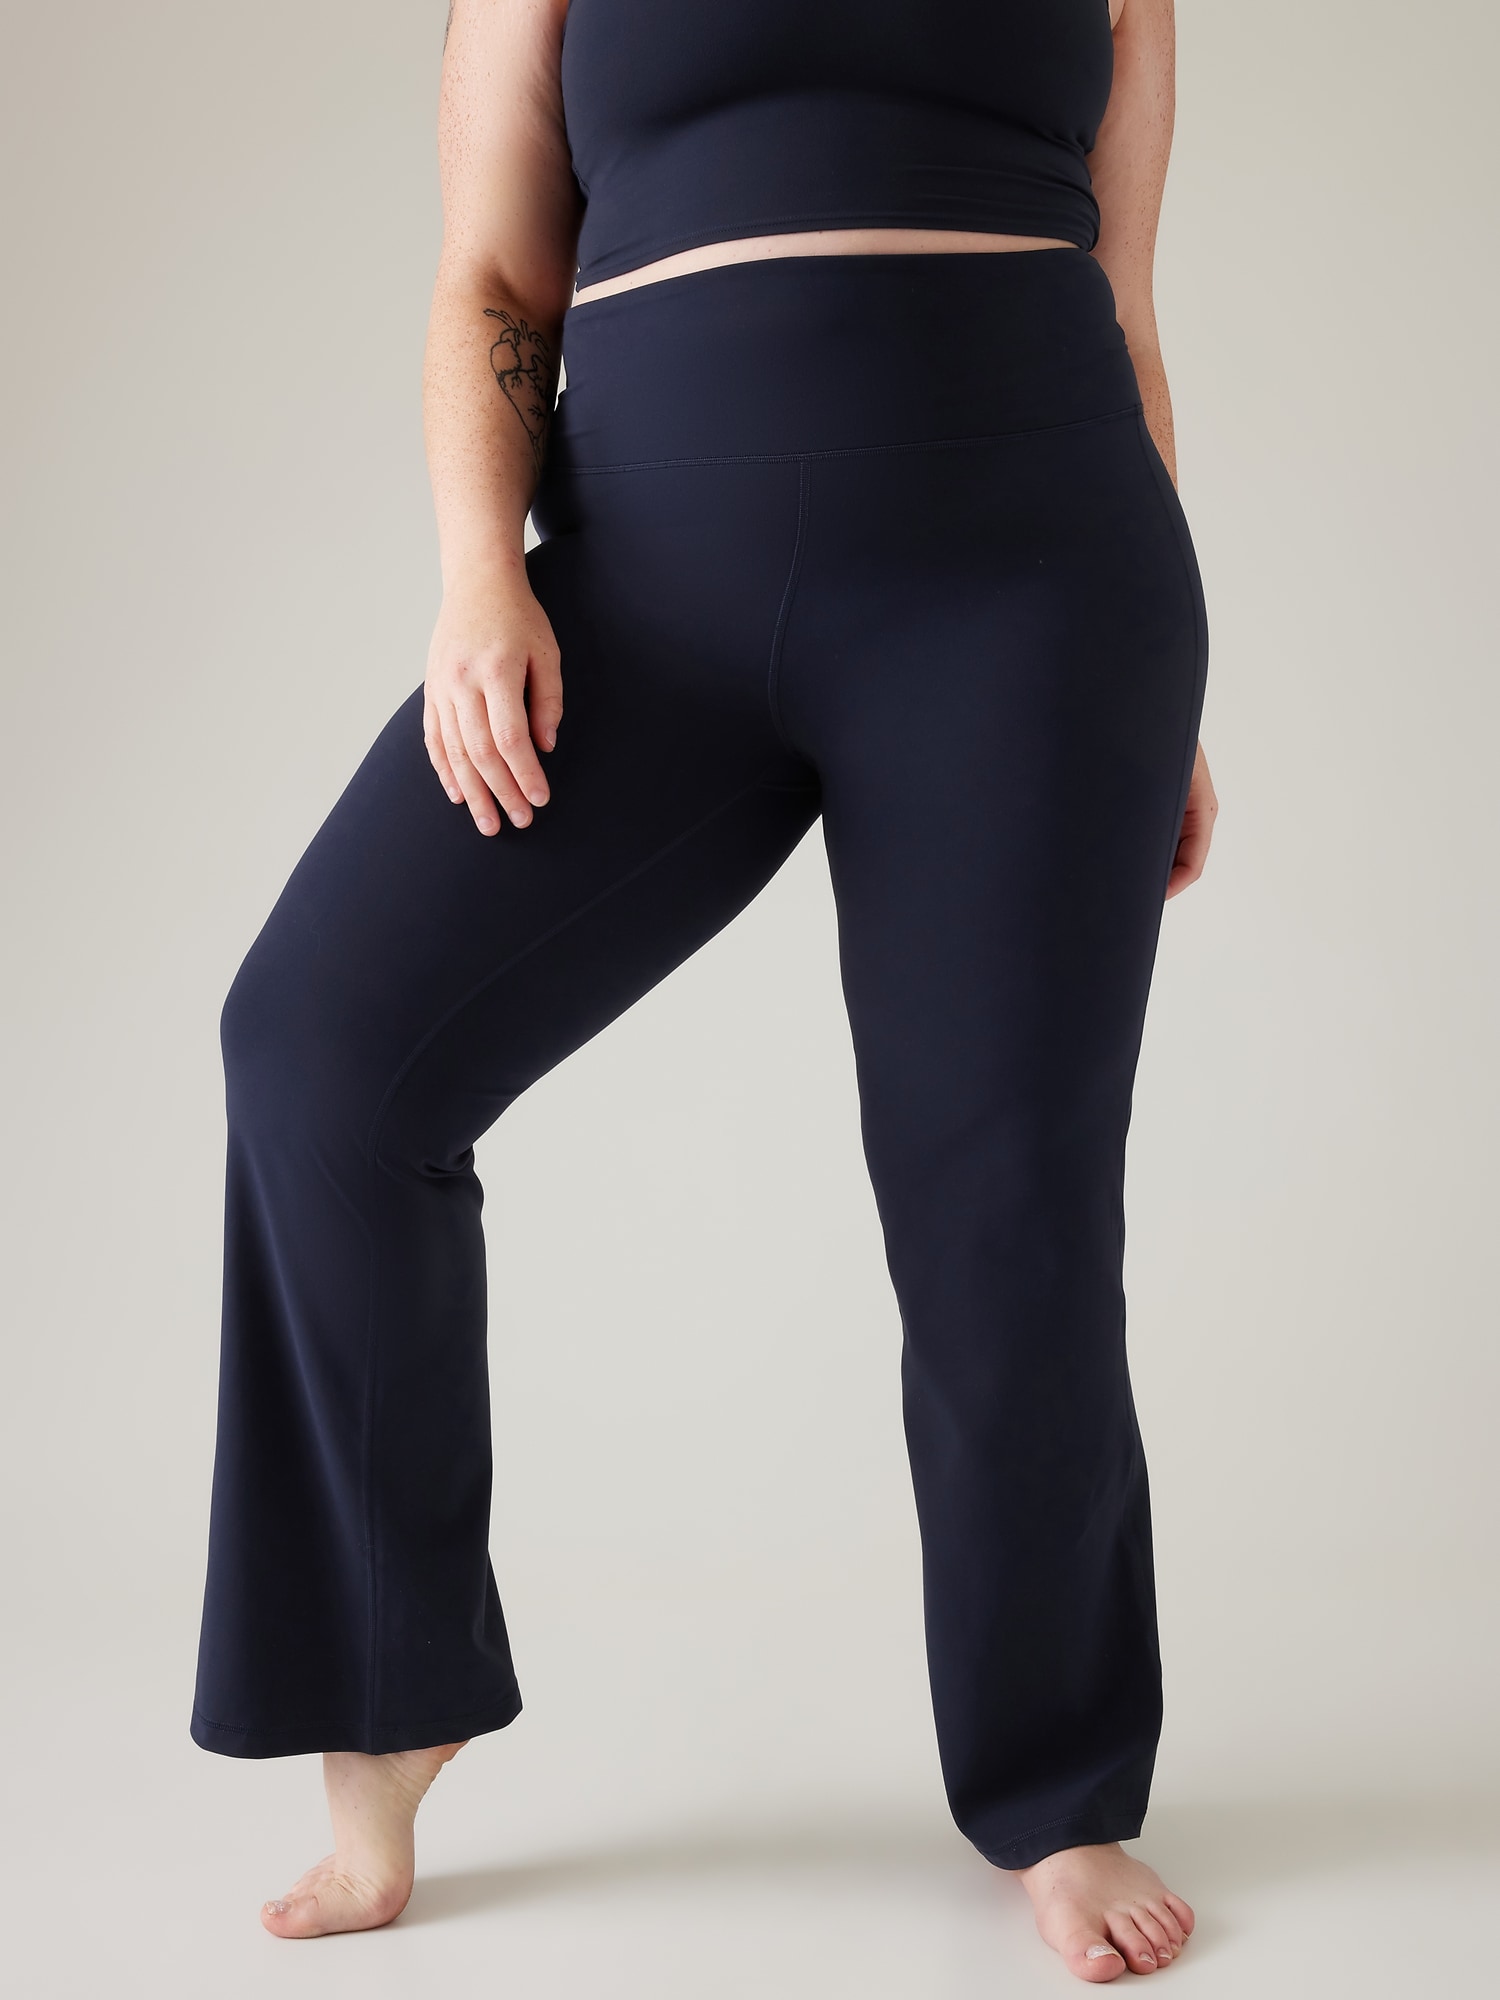 Yoga Pants Tall Length for Women Women's Flare Leggings High Waist Casual  Workout Bootcut Yoga Pants Yoga Pants Muscle Black : : Fashion